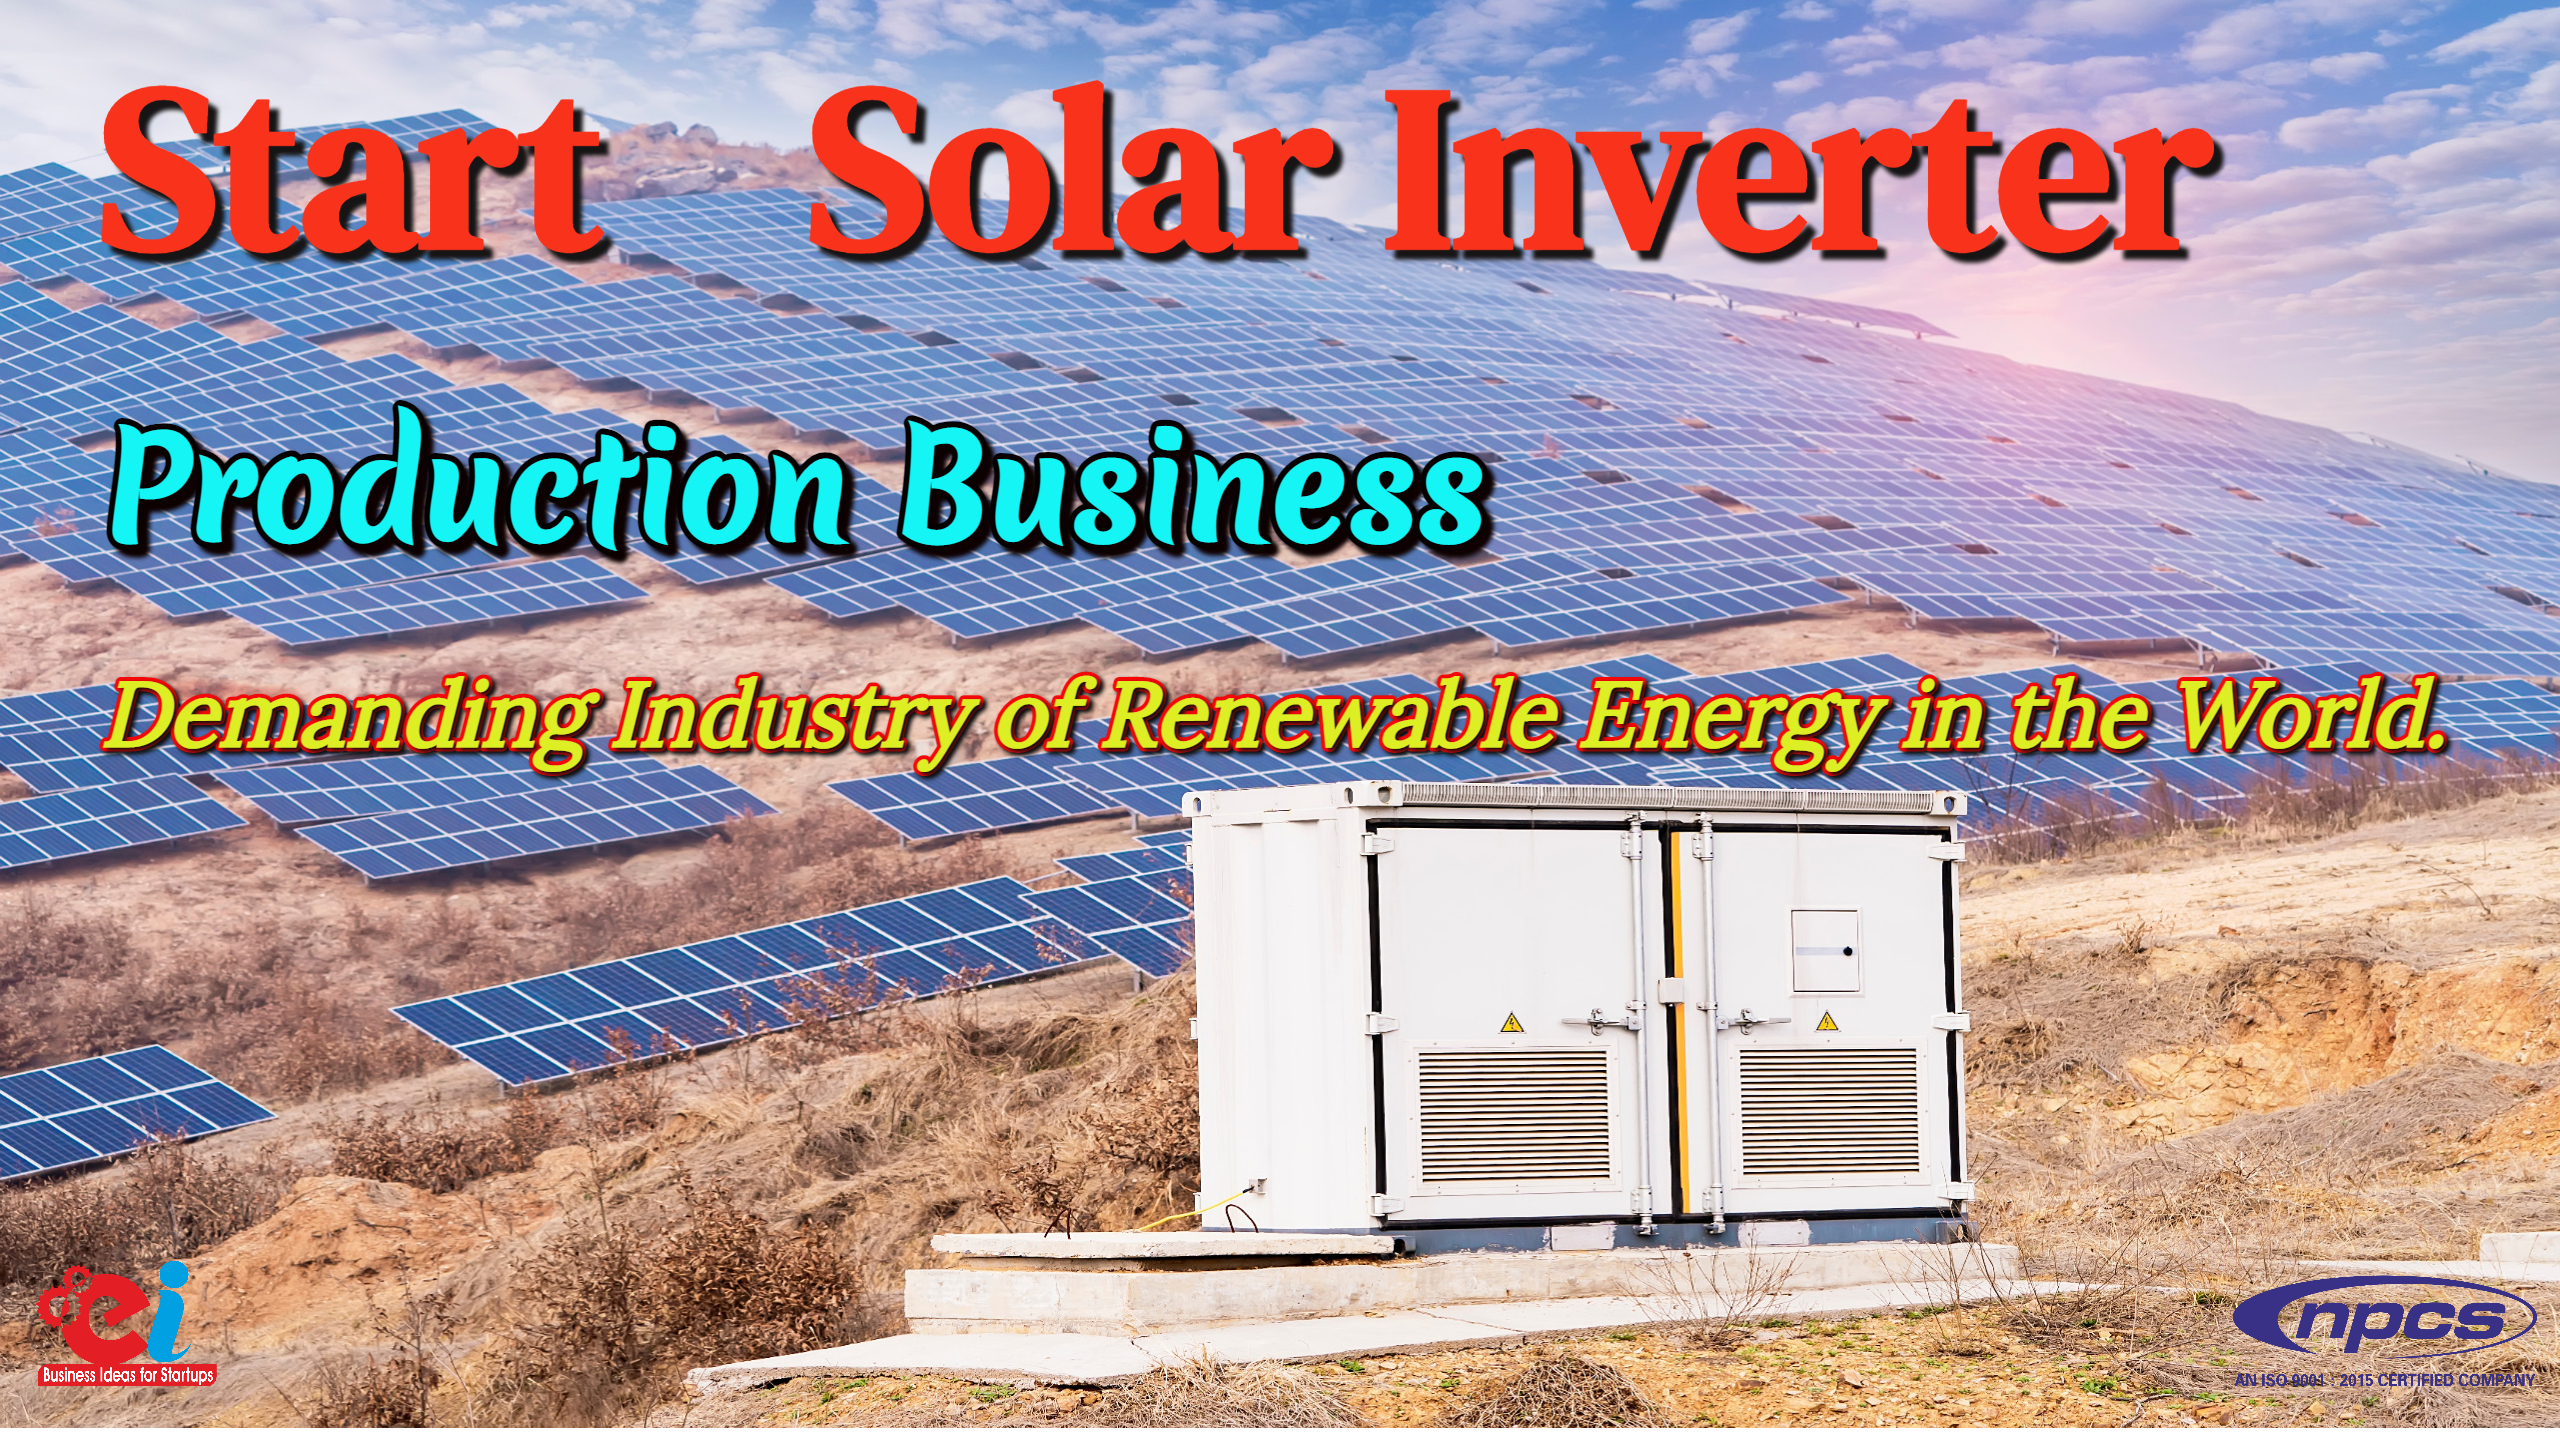 Start Solar Inverter Production Business Demanding Industry of Renewable Energy in the World